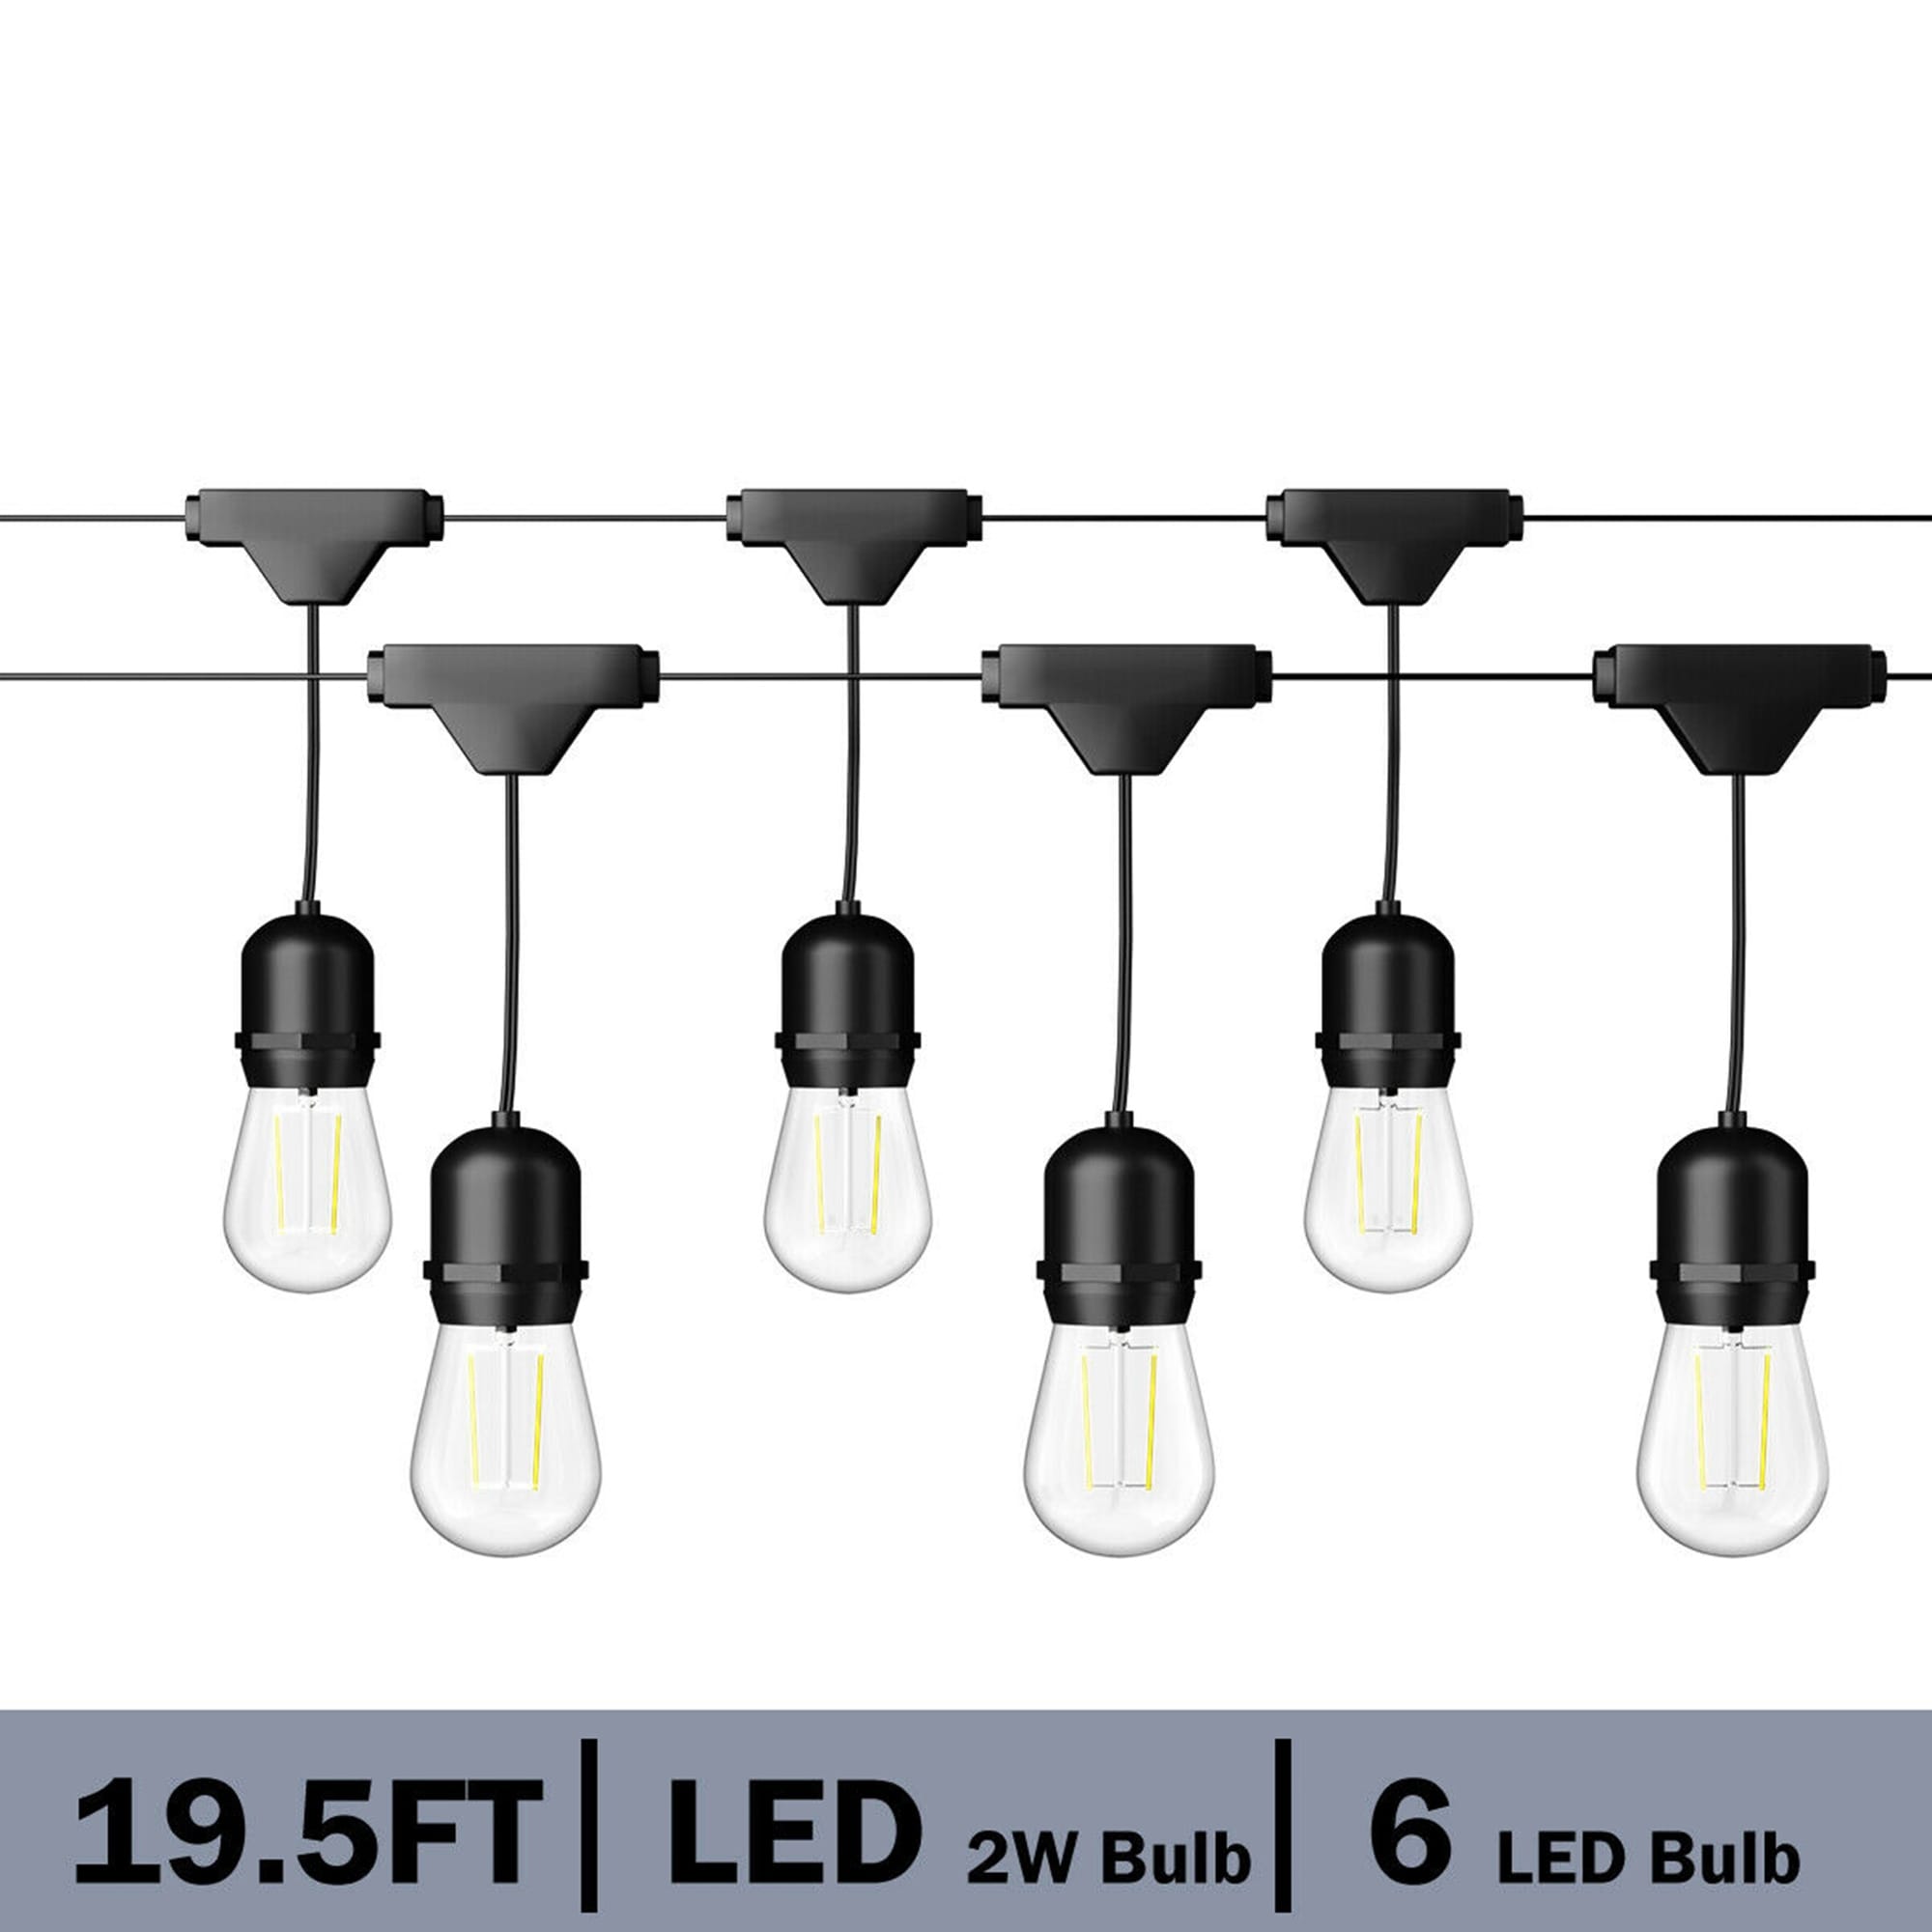 Outdoor LED String Lights Commercial Grade Weatherproof Patio Lights - Black - Length: 19.5FT